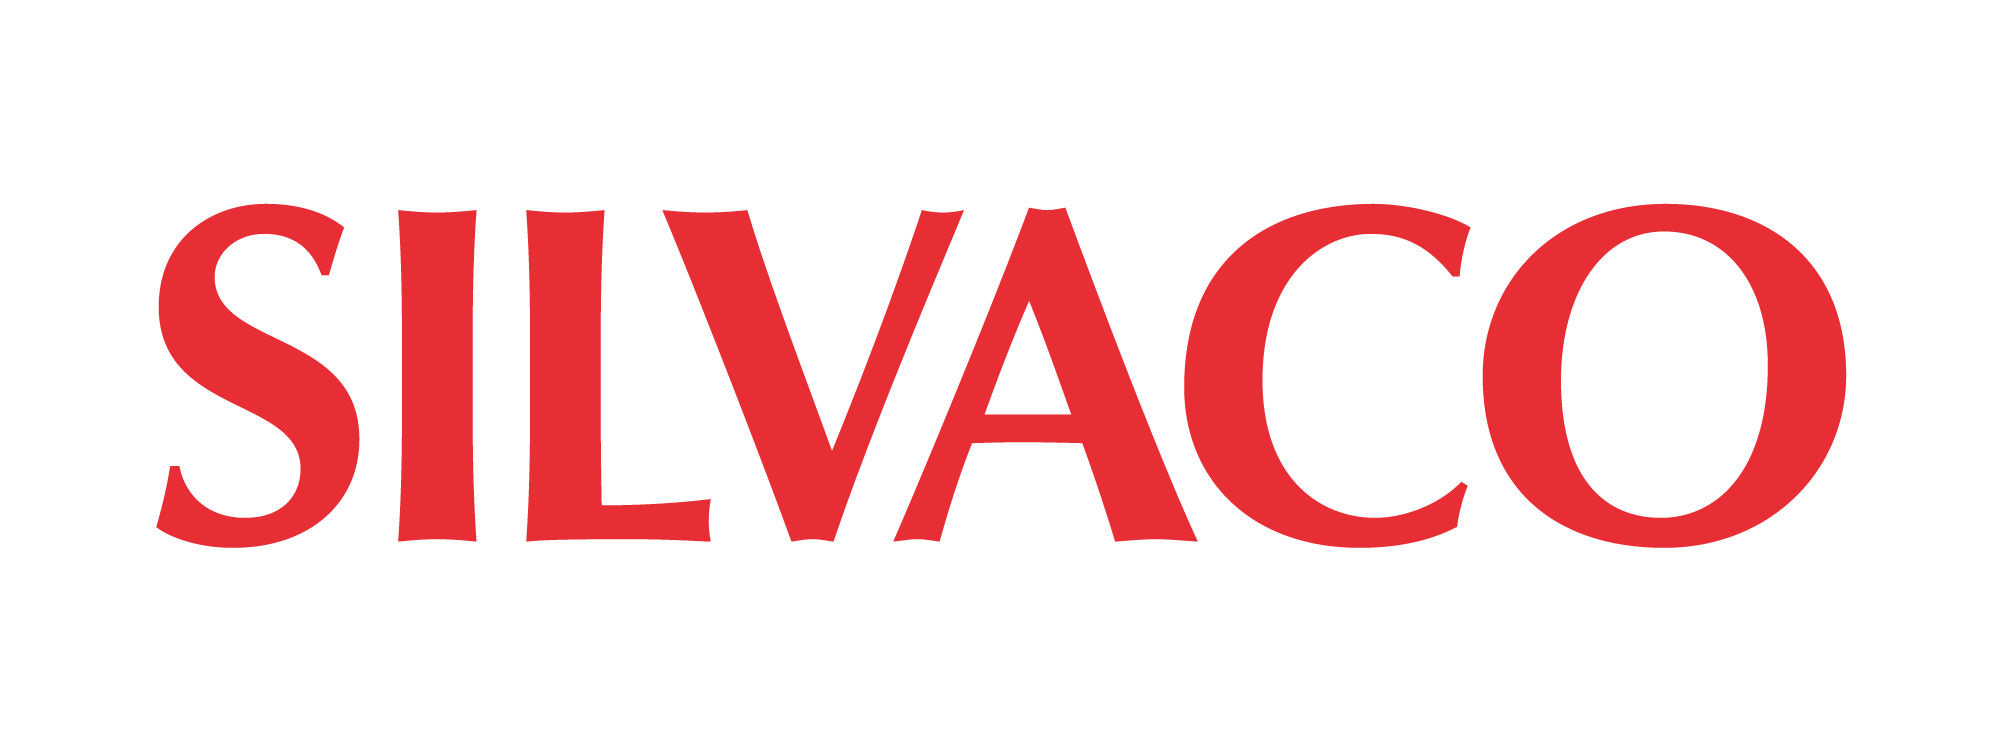 Silvaco Japan Co., Ltd.